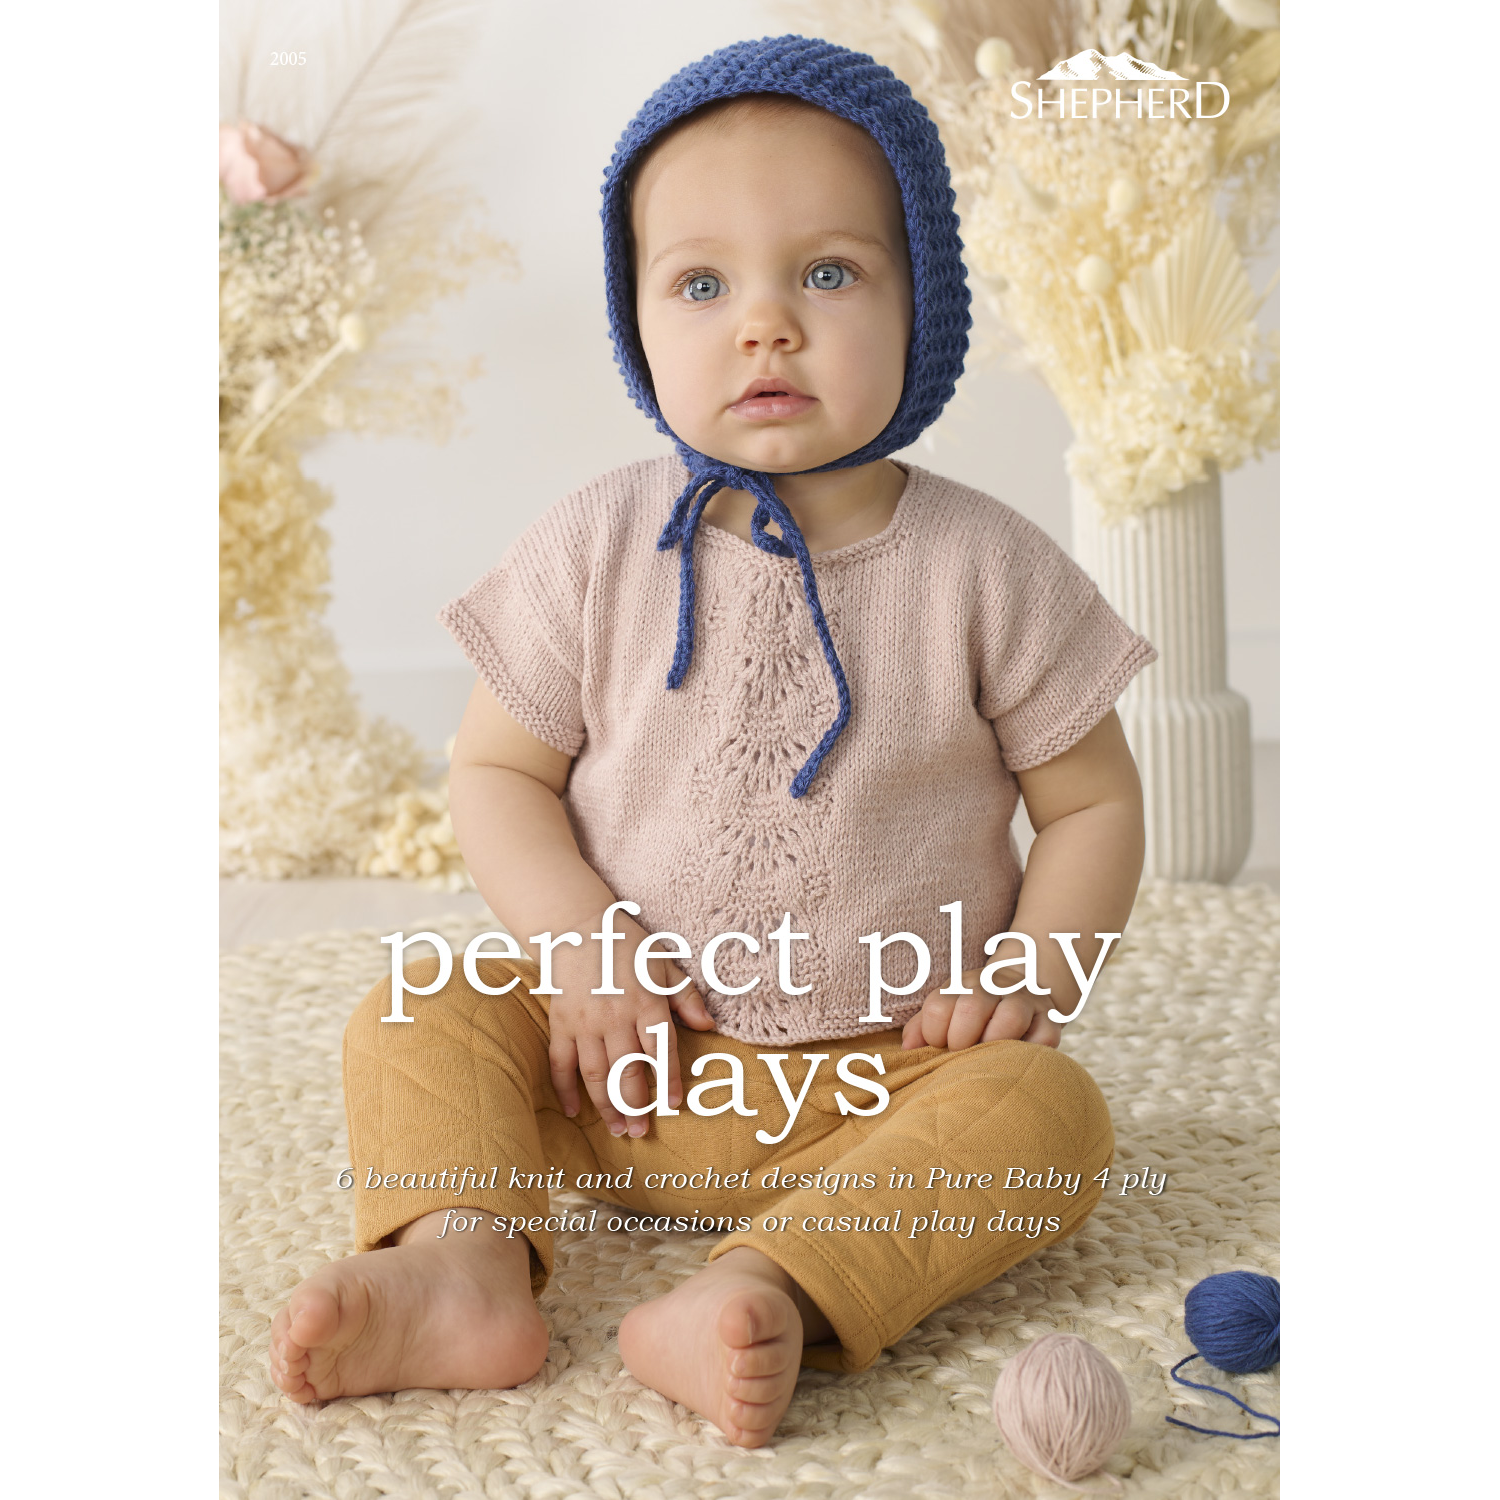 Perfect Play Days 2005 - Shepherd